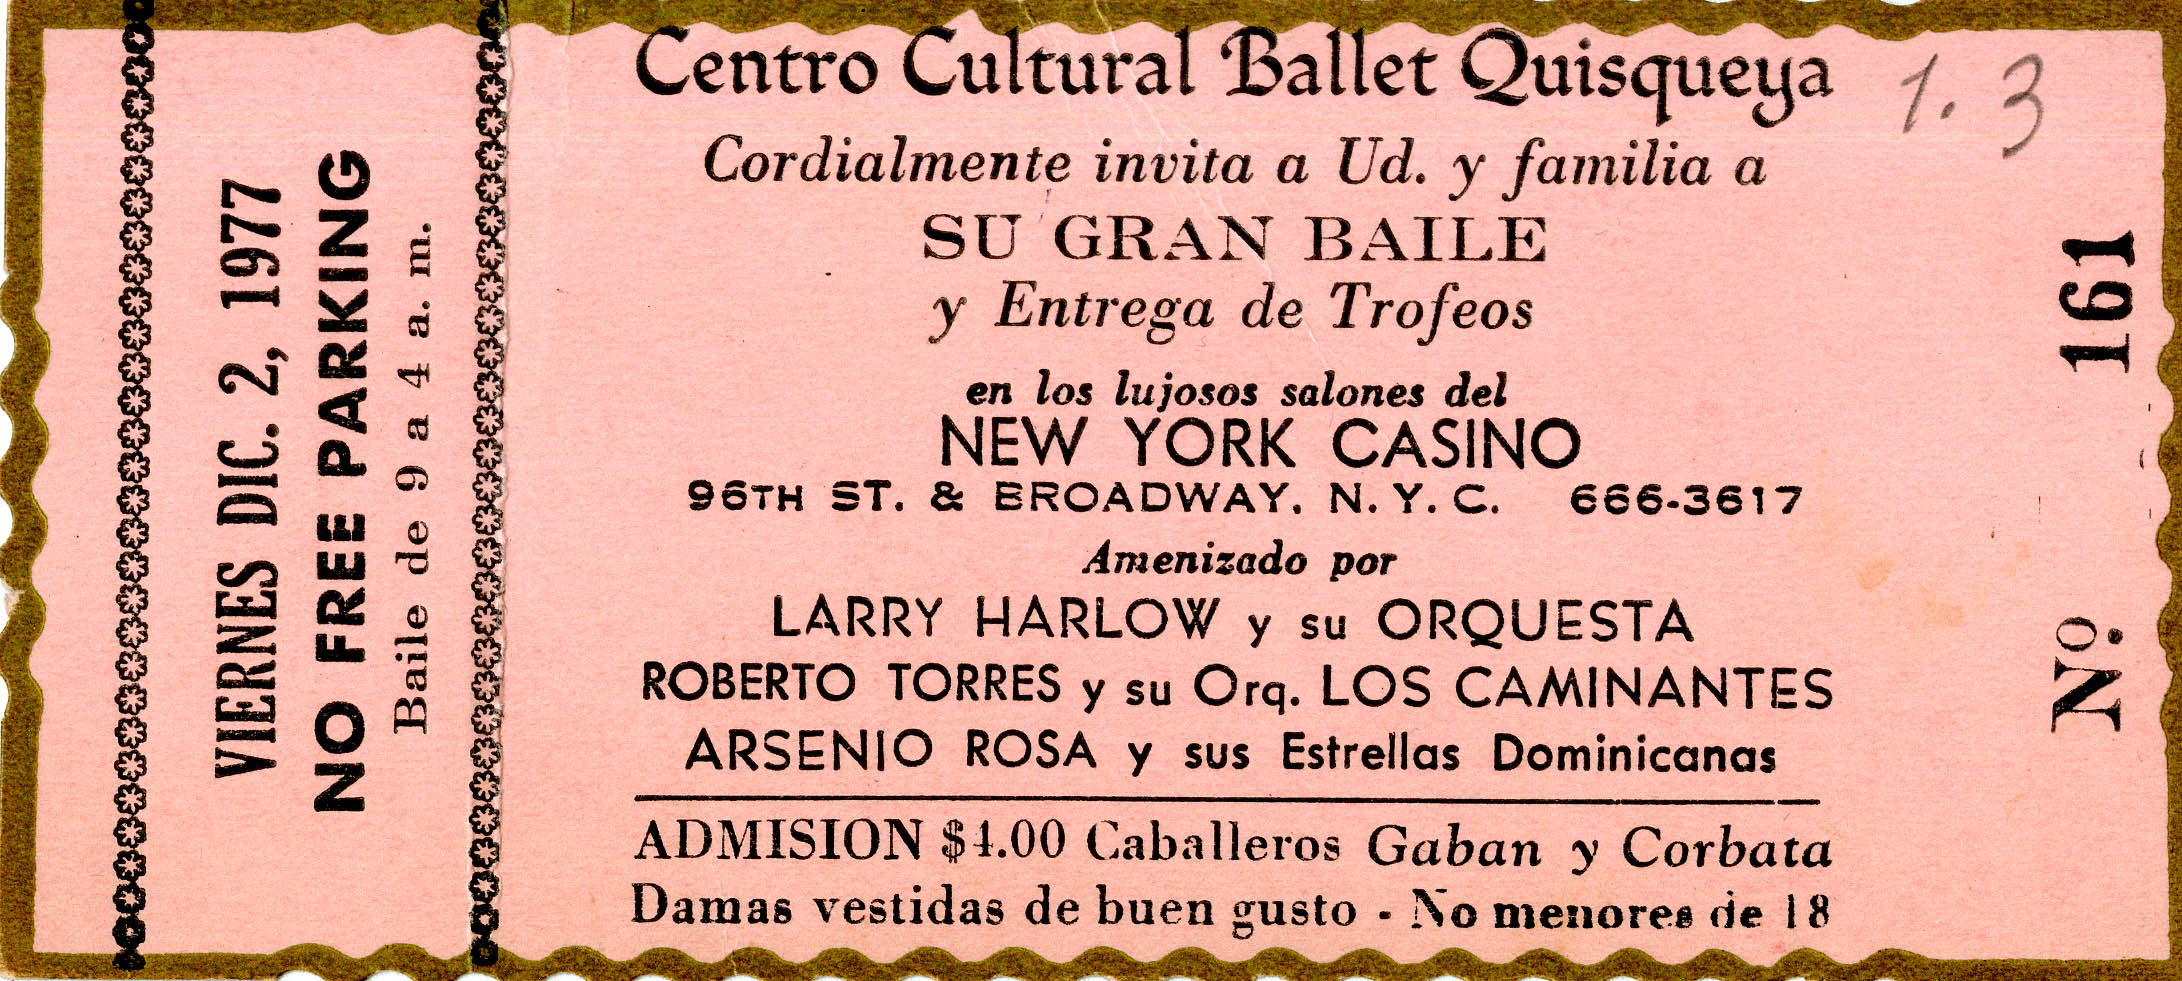 Centro Cultural Ballet Quisqueya Grand Dance Ticket, December 2, 1977